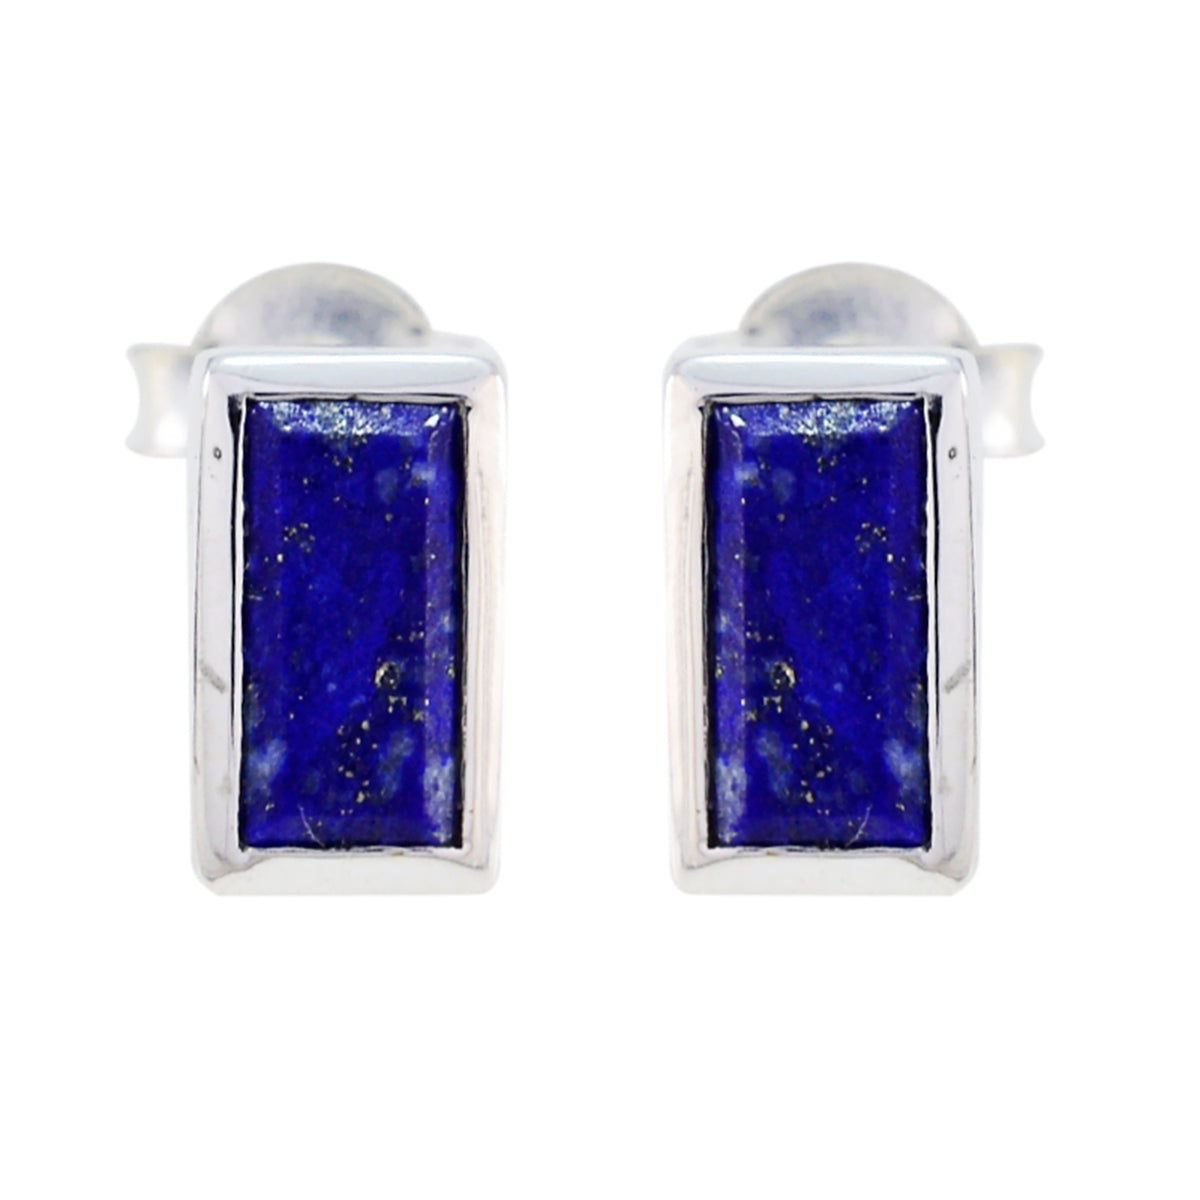 Riyo Beeindruckender 925er Sterlingsilber-Ohrring für Damen, Lapislazuli-Ohrring, Lünettenfassung, blauer Ohrring-Bolzenohrring